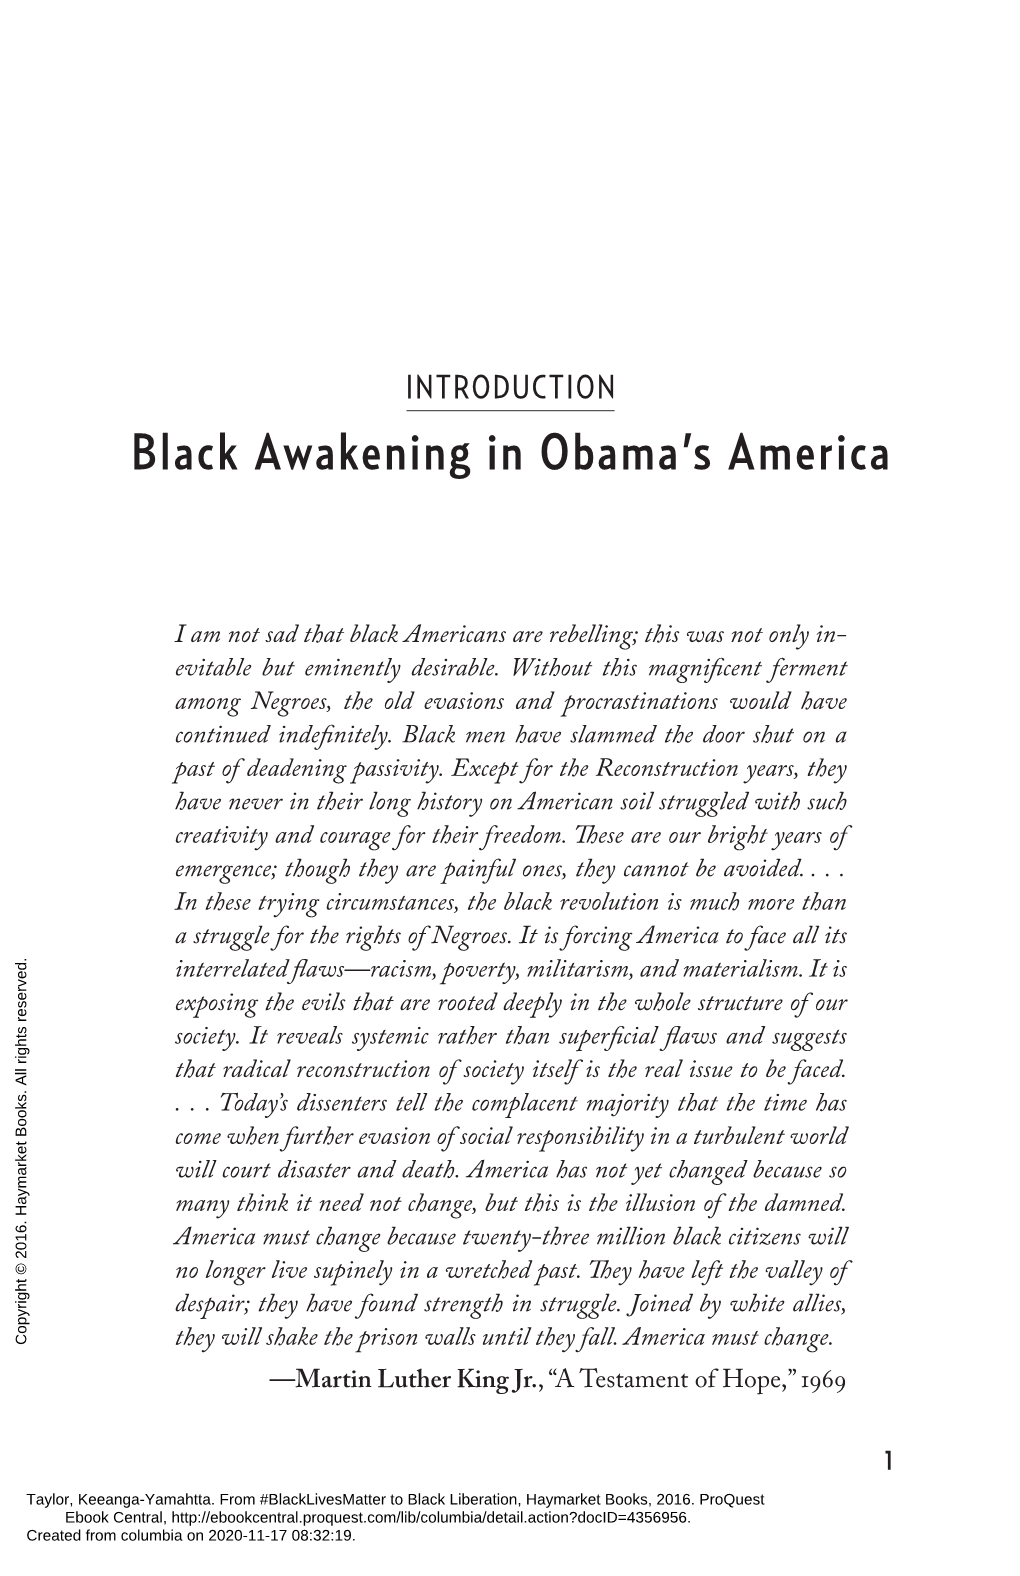 Introduction: Black Awakening in Obama's America